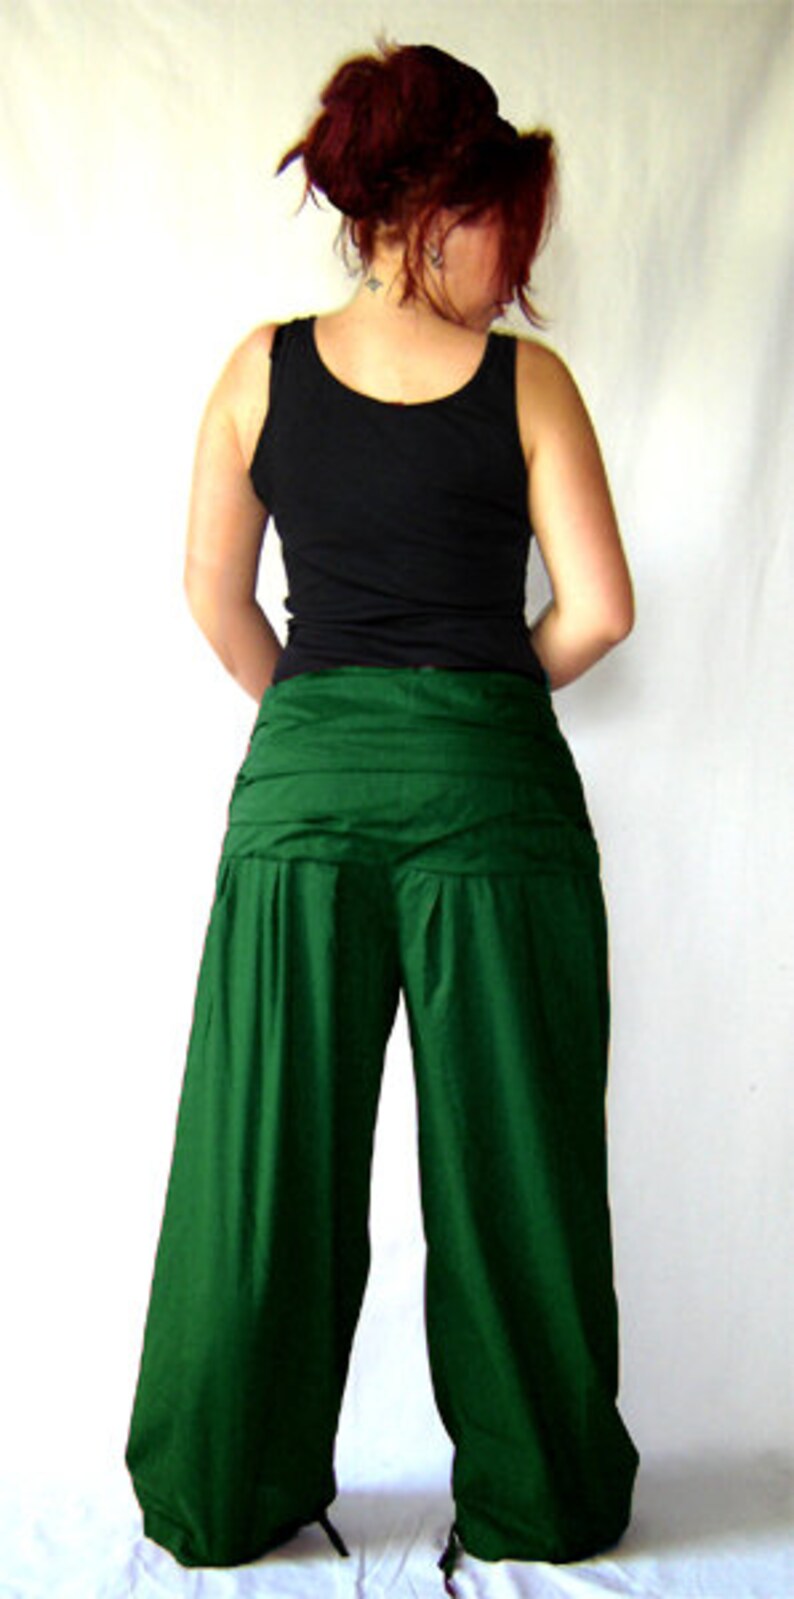 Faltenhose breiter Bund dunkelgrün grün Hose kissagato S M L XL Bild 4